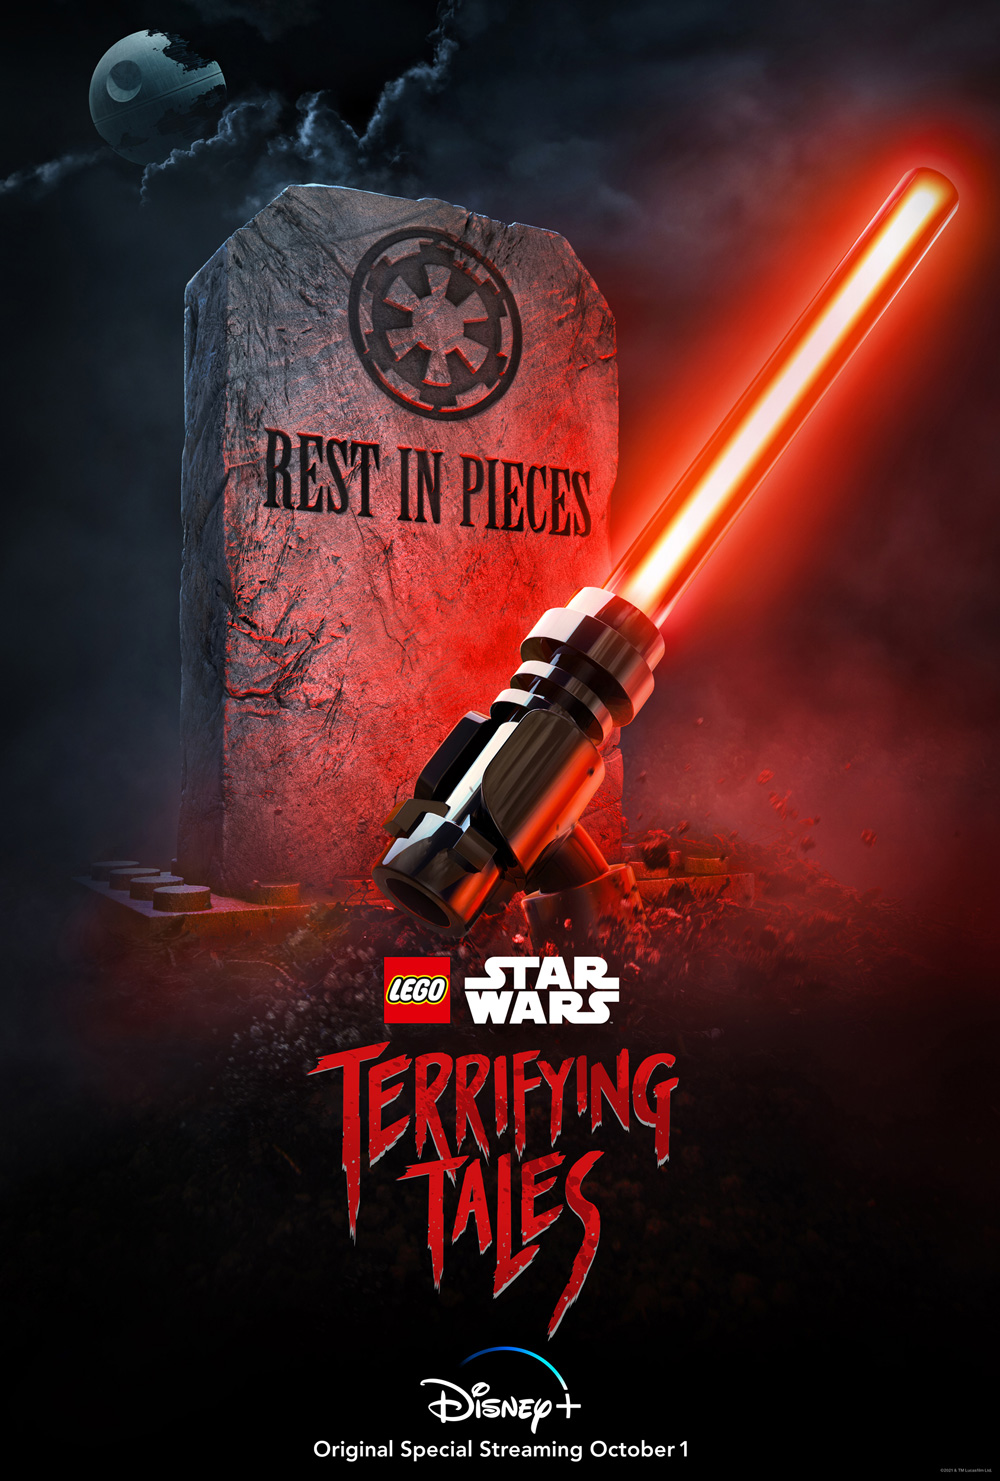 LEGO Star Wars: Terrifying Tales